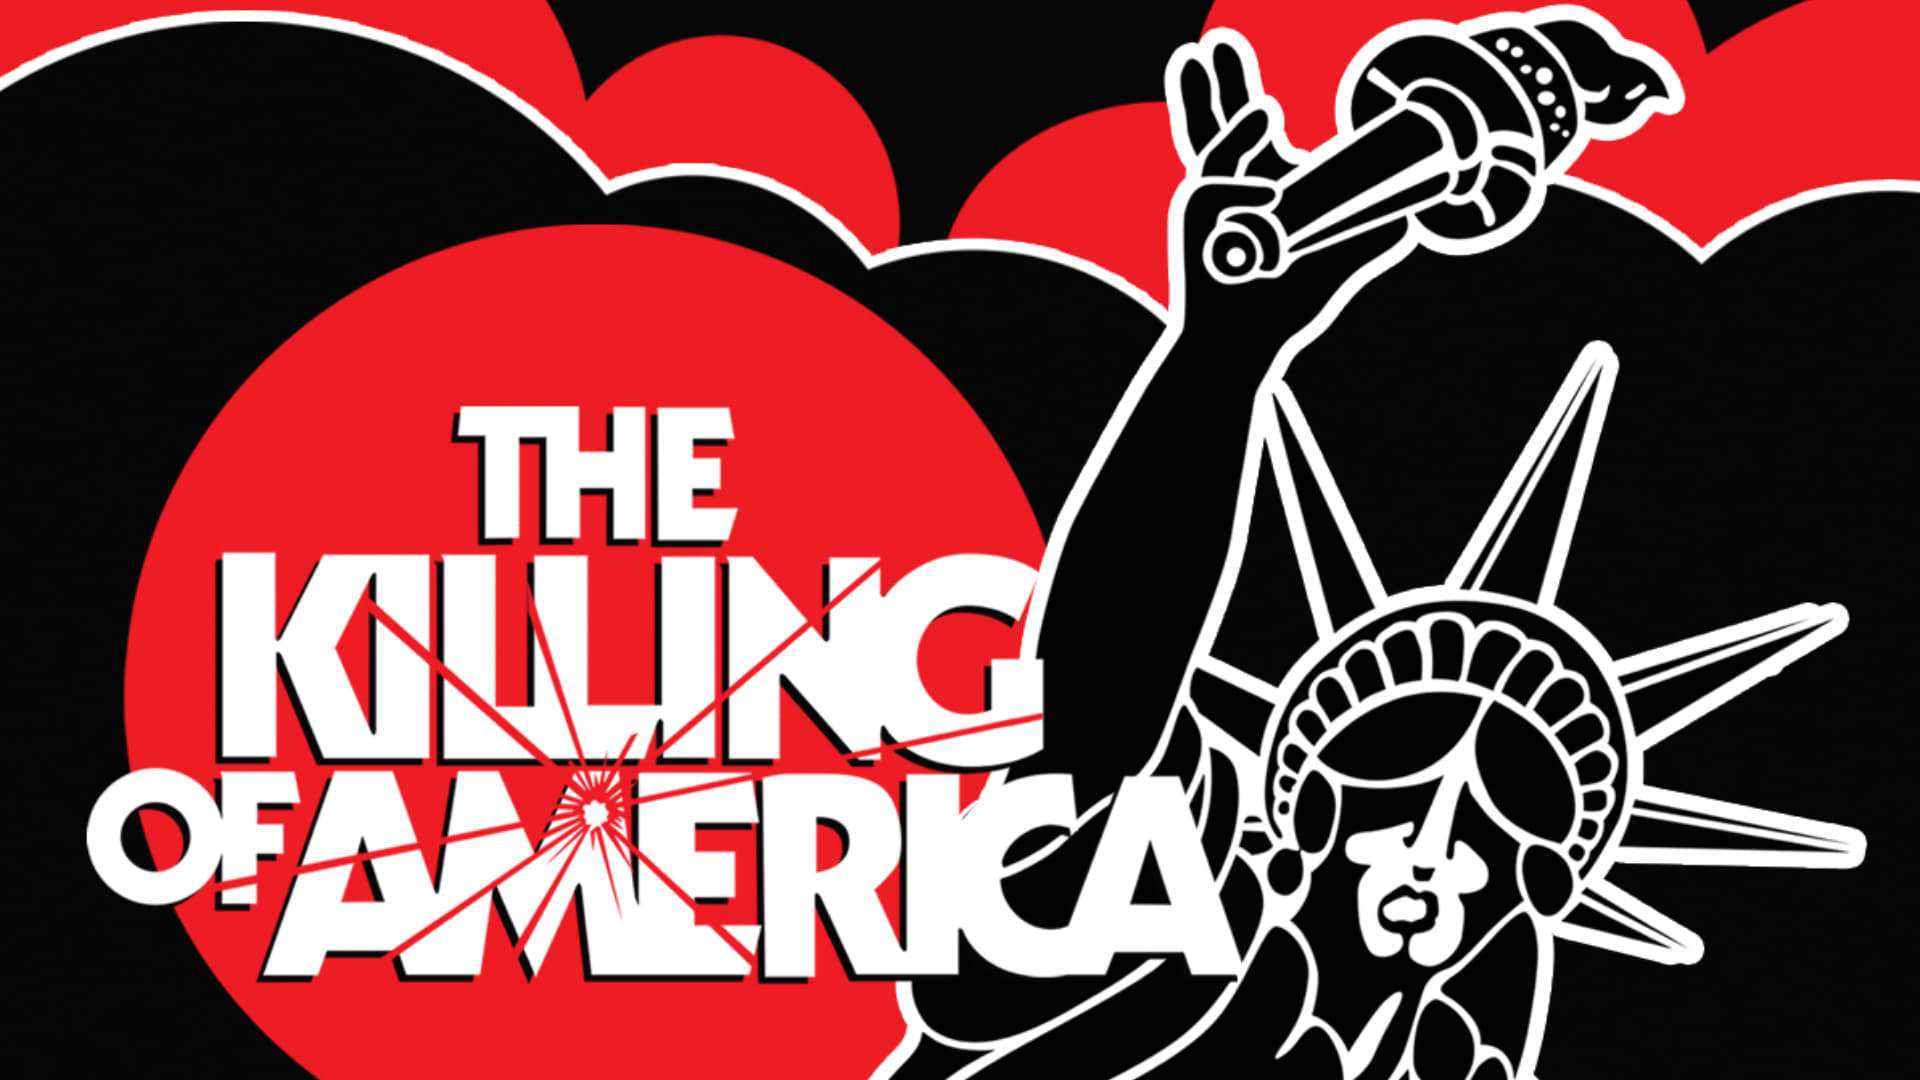 The Killing of America (1981)